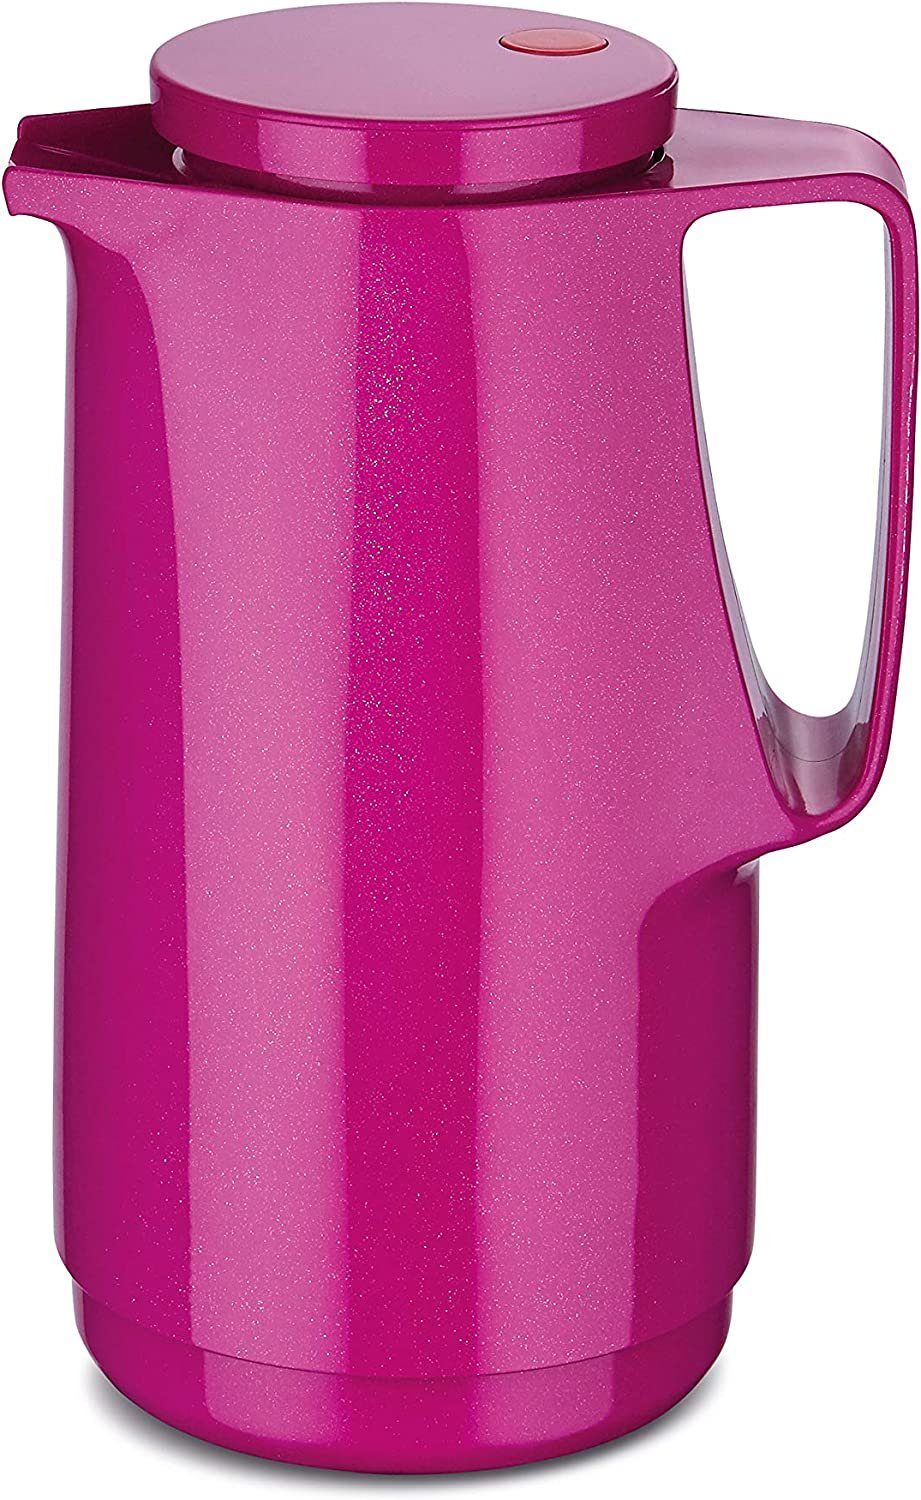 ROTPUNKT Isolierkanne 1,0 Liter Glaseinsatz I hochwertig I langlebig Ivoller Geschmack 760, 1 l, (sparkling pink), Glaskolben aus doppelwandigem Rosalin-Glas